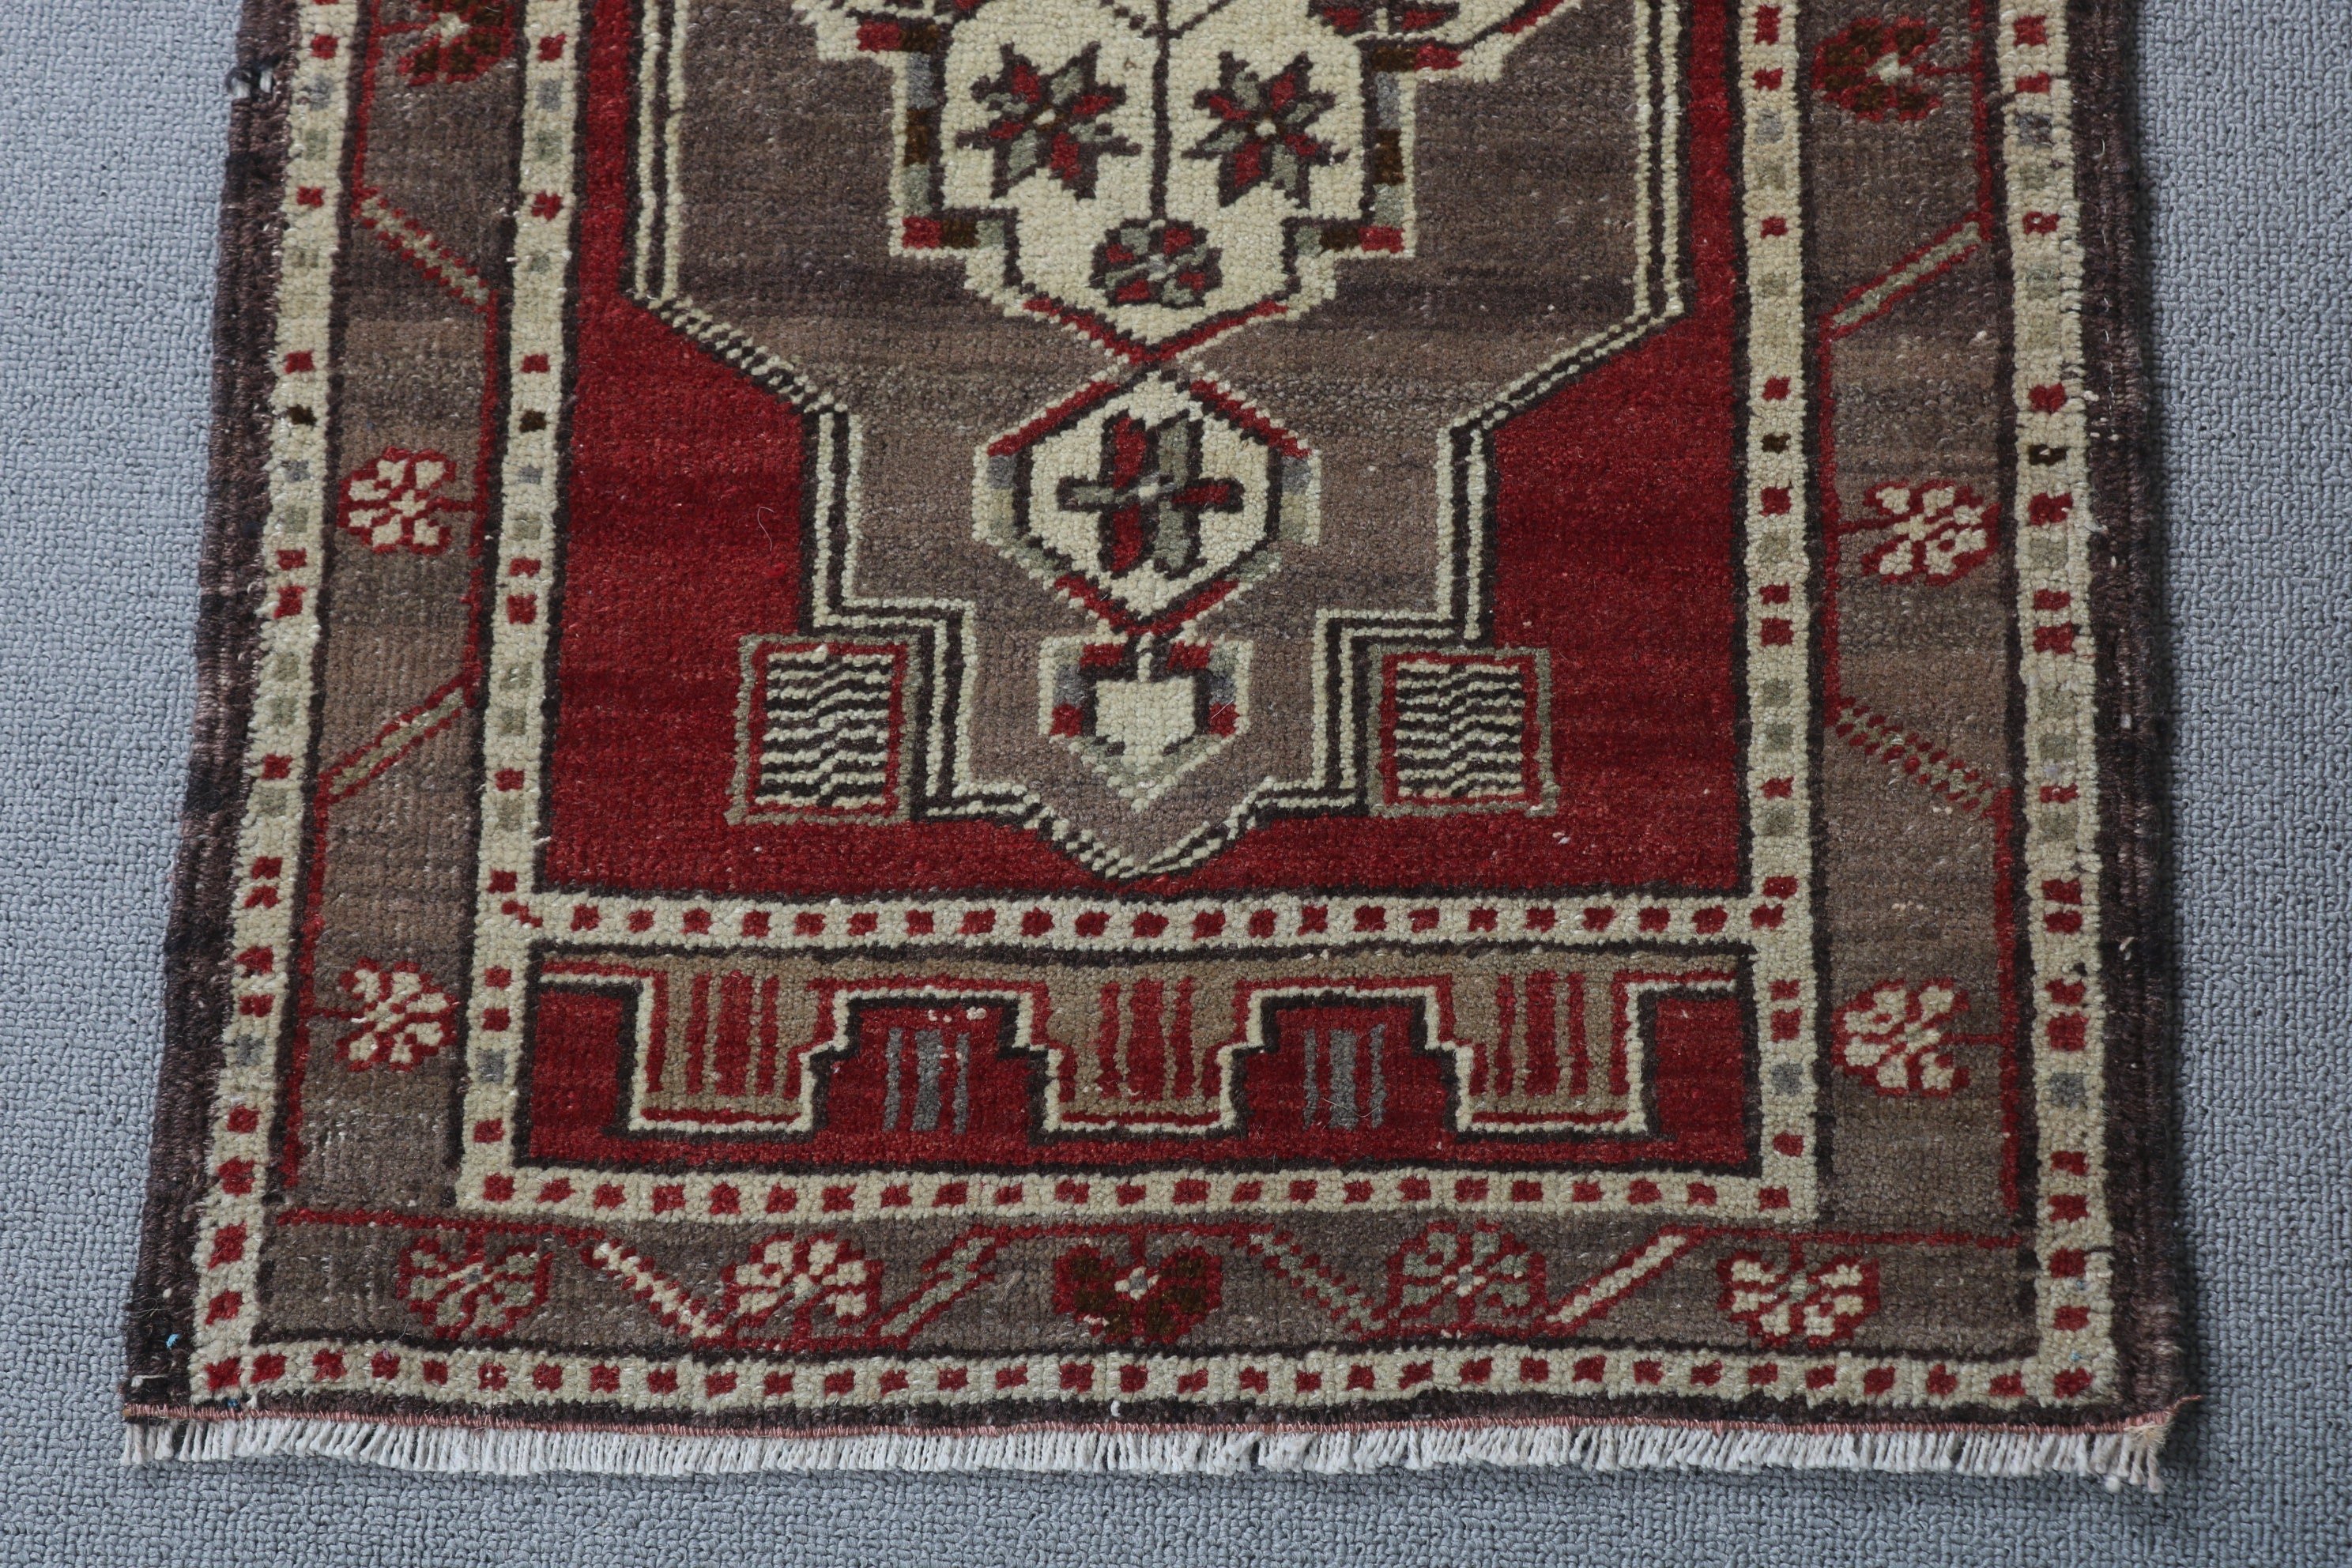 Red Anatolian Rug, Turkish Rugs, Antique Rugs, Handmade Rugs, Bedroom Rug, Vintage Rug, Oriental Rugs, Wall Hanging Rug, 1.6x3 ft Small Rug